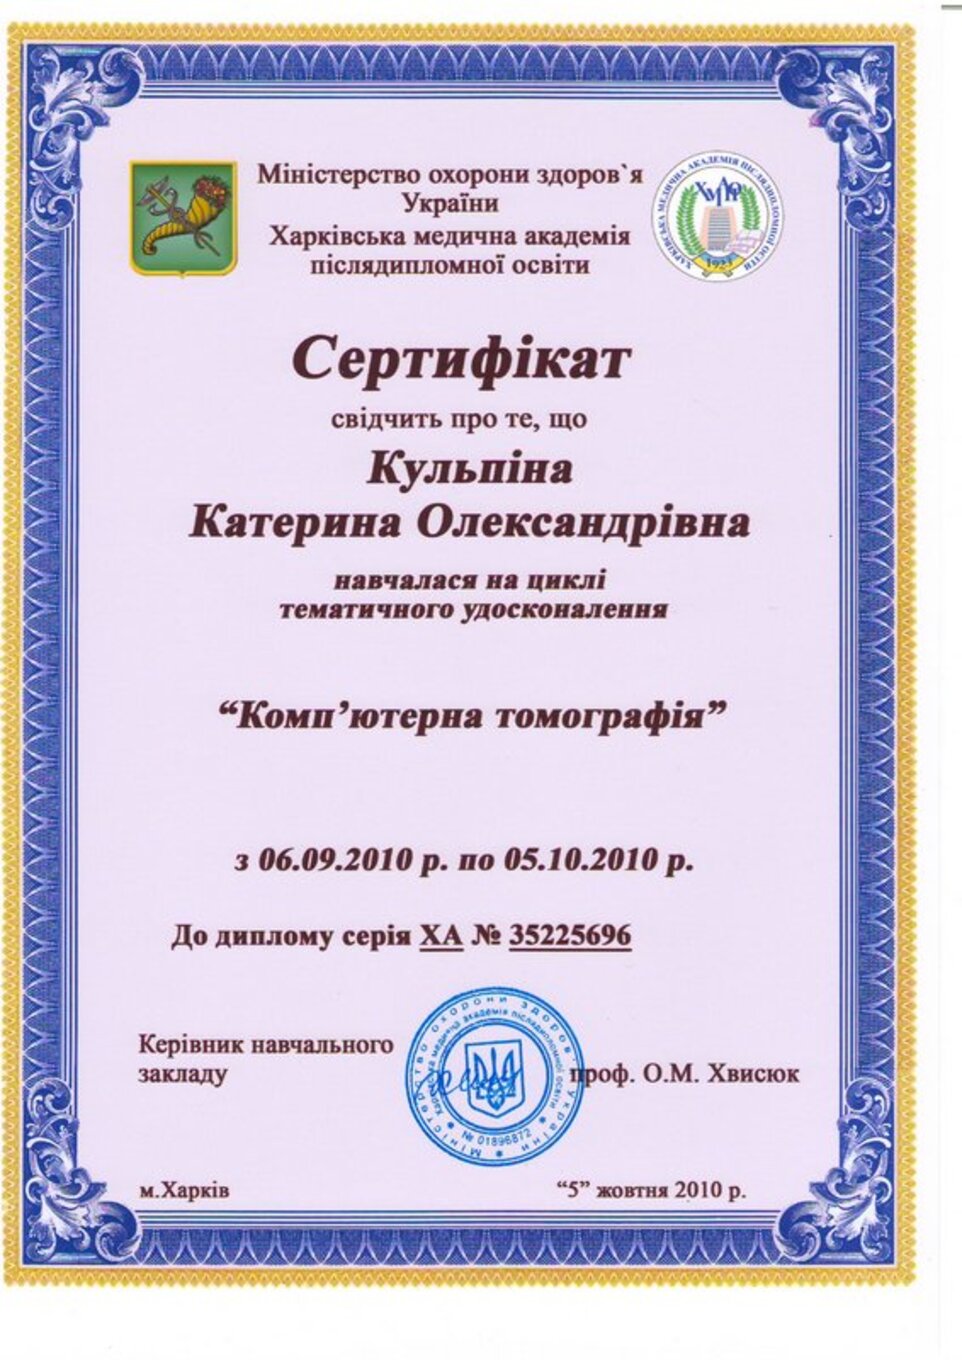 certificates/kulpina-katerina-oleksandrivna/kulpina-certificates-03.jpg